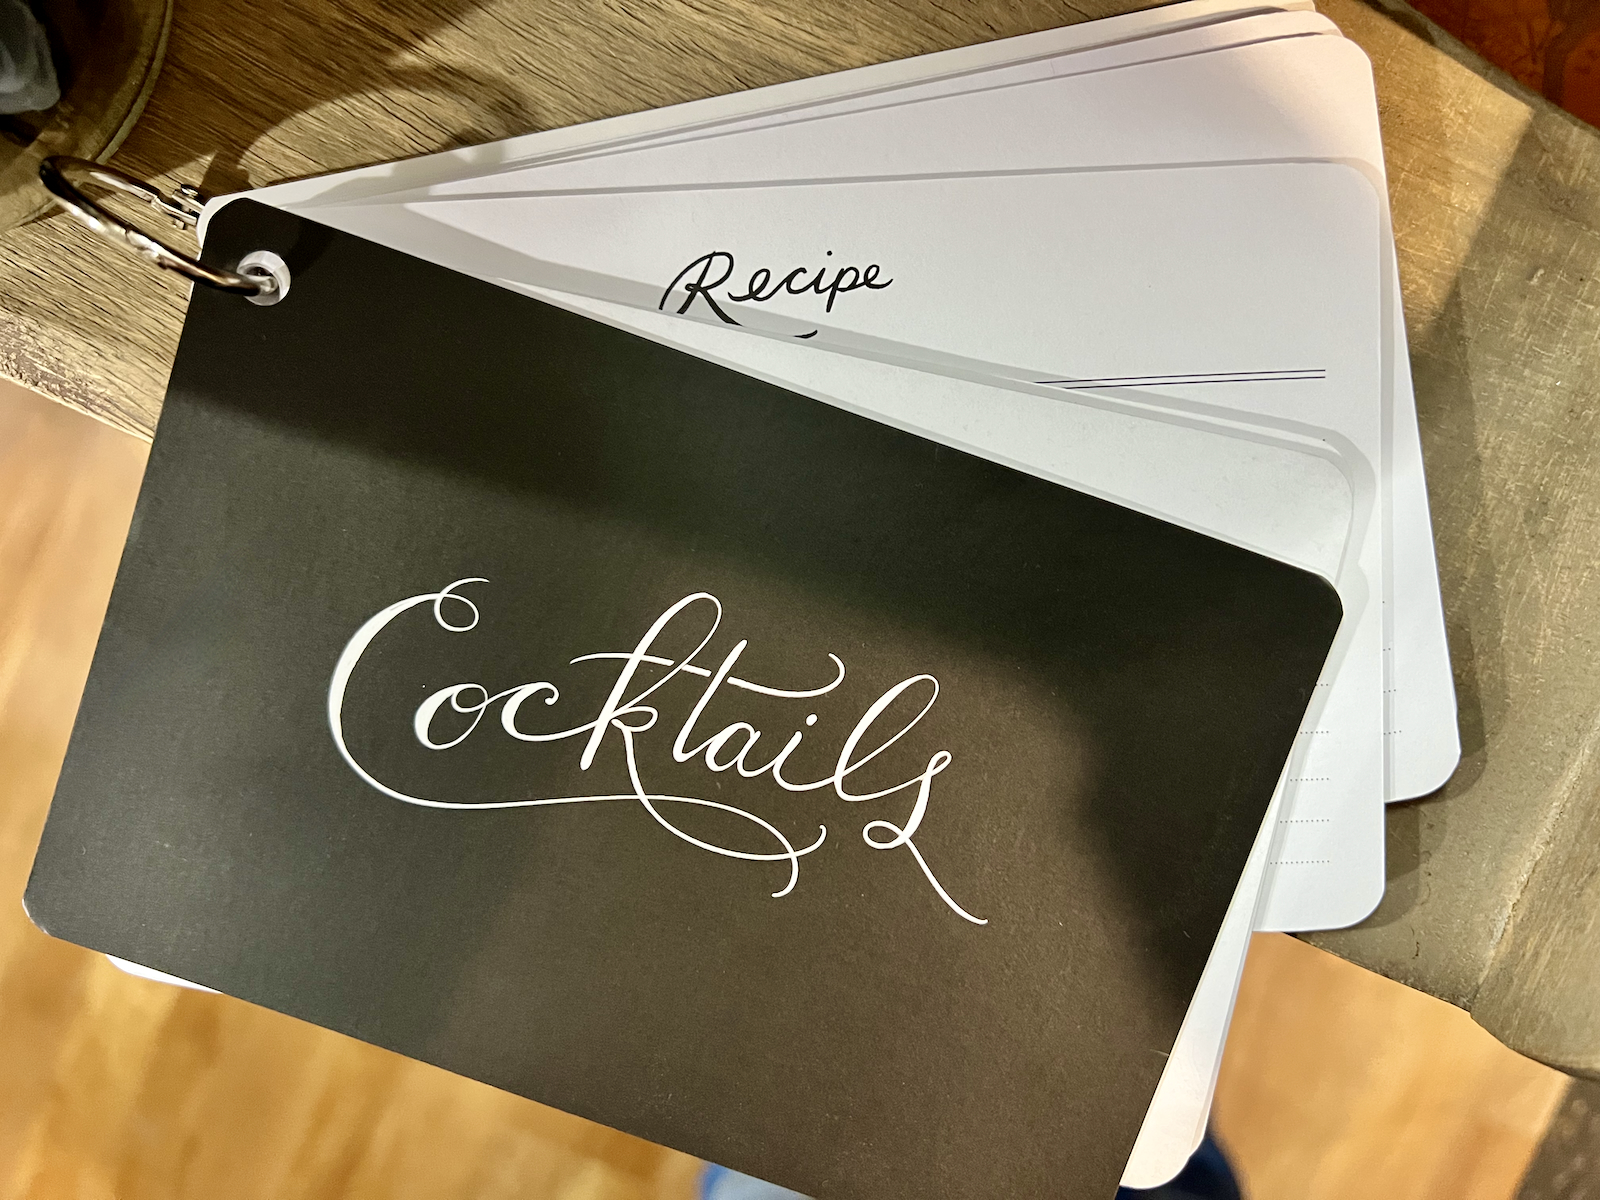 Cocktail recipe cards